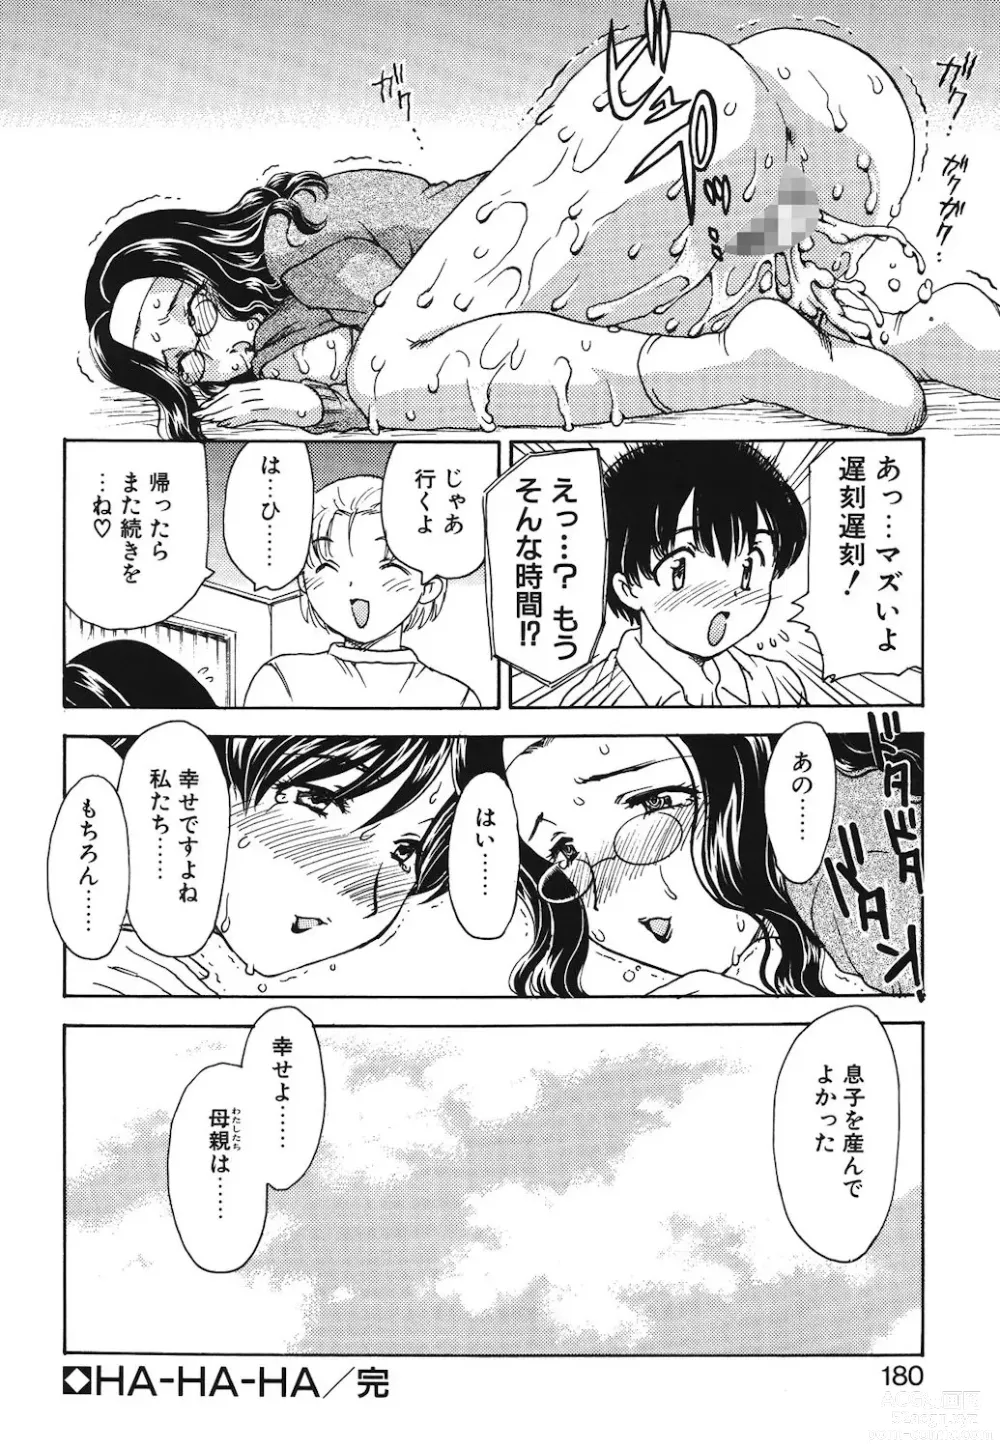 Page 177 of manga HA-HA